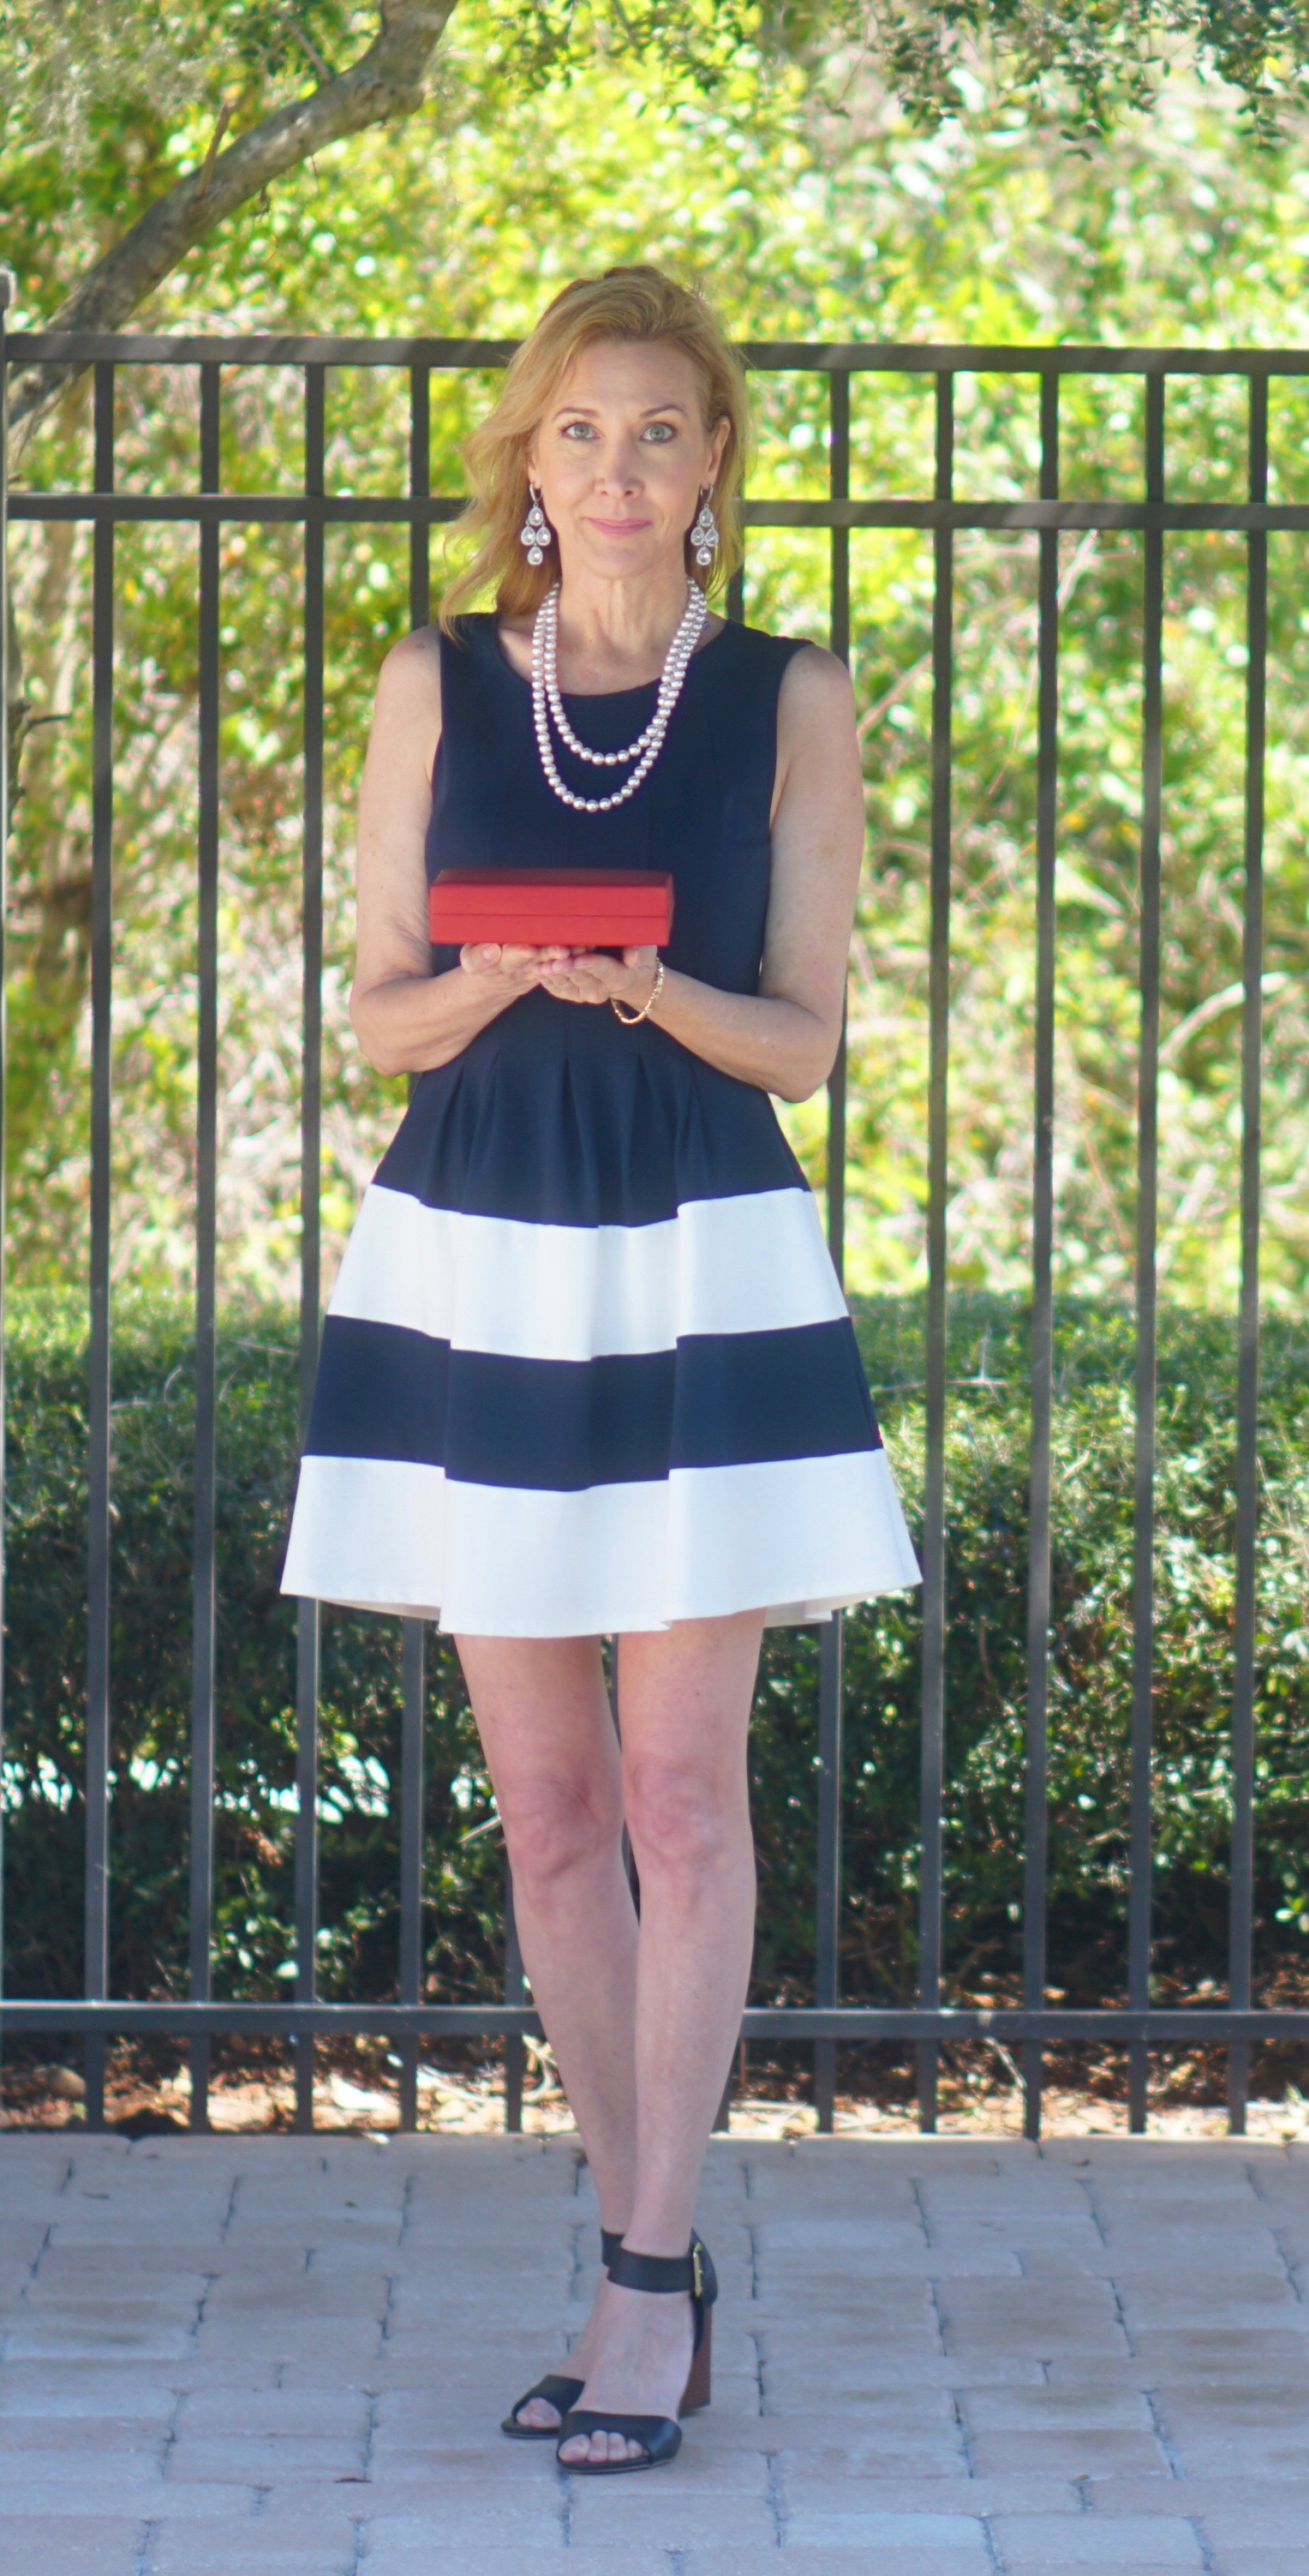 woman wearing black striped dress holding red box